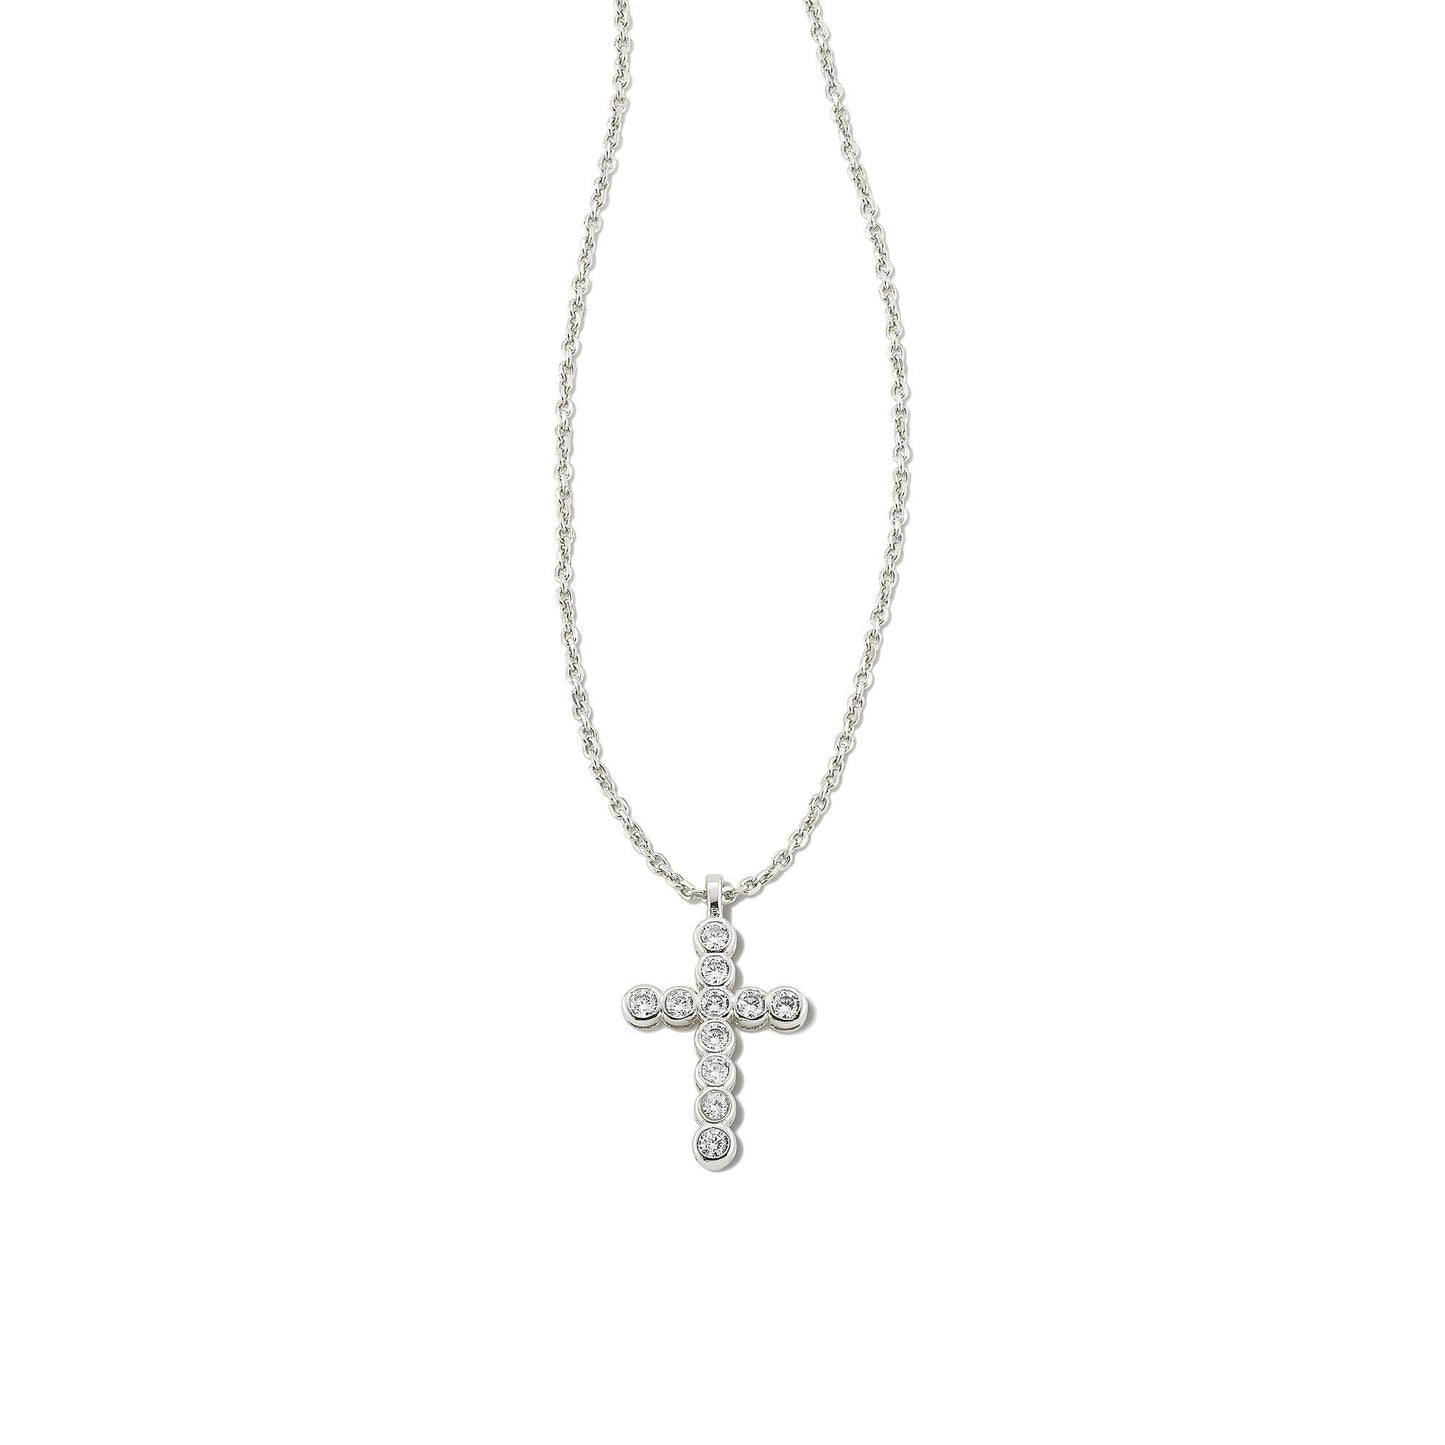 Cross Crystal Pendant Necklace in Rhodium